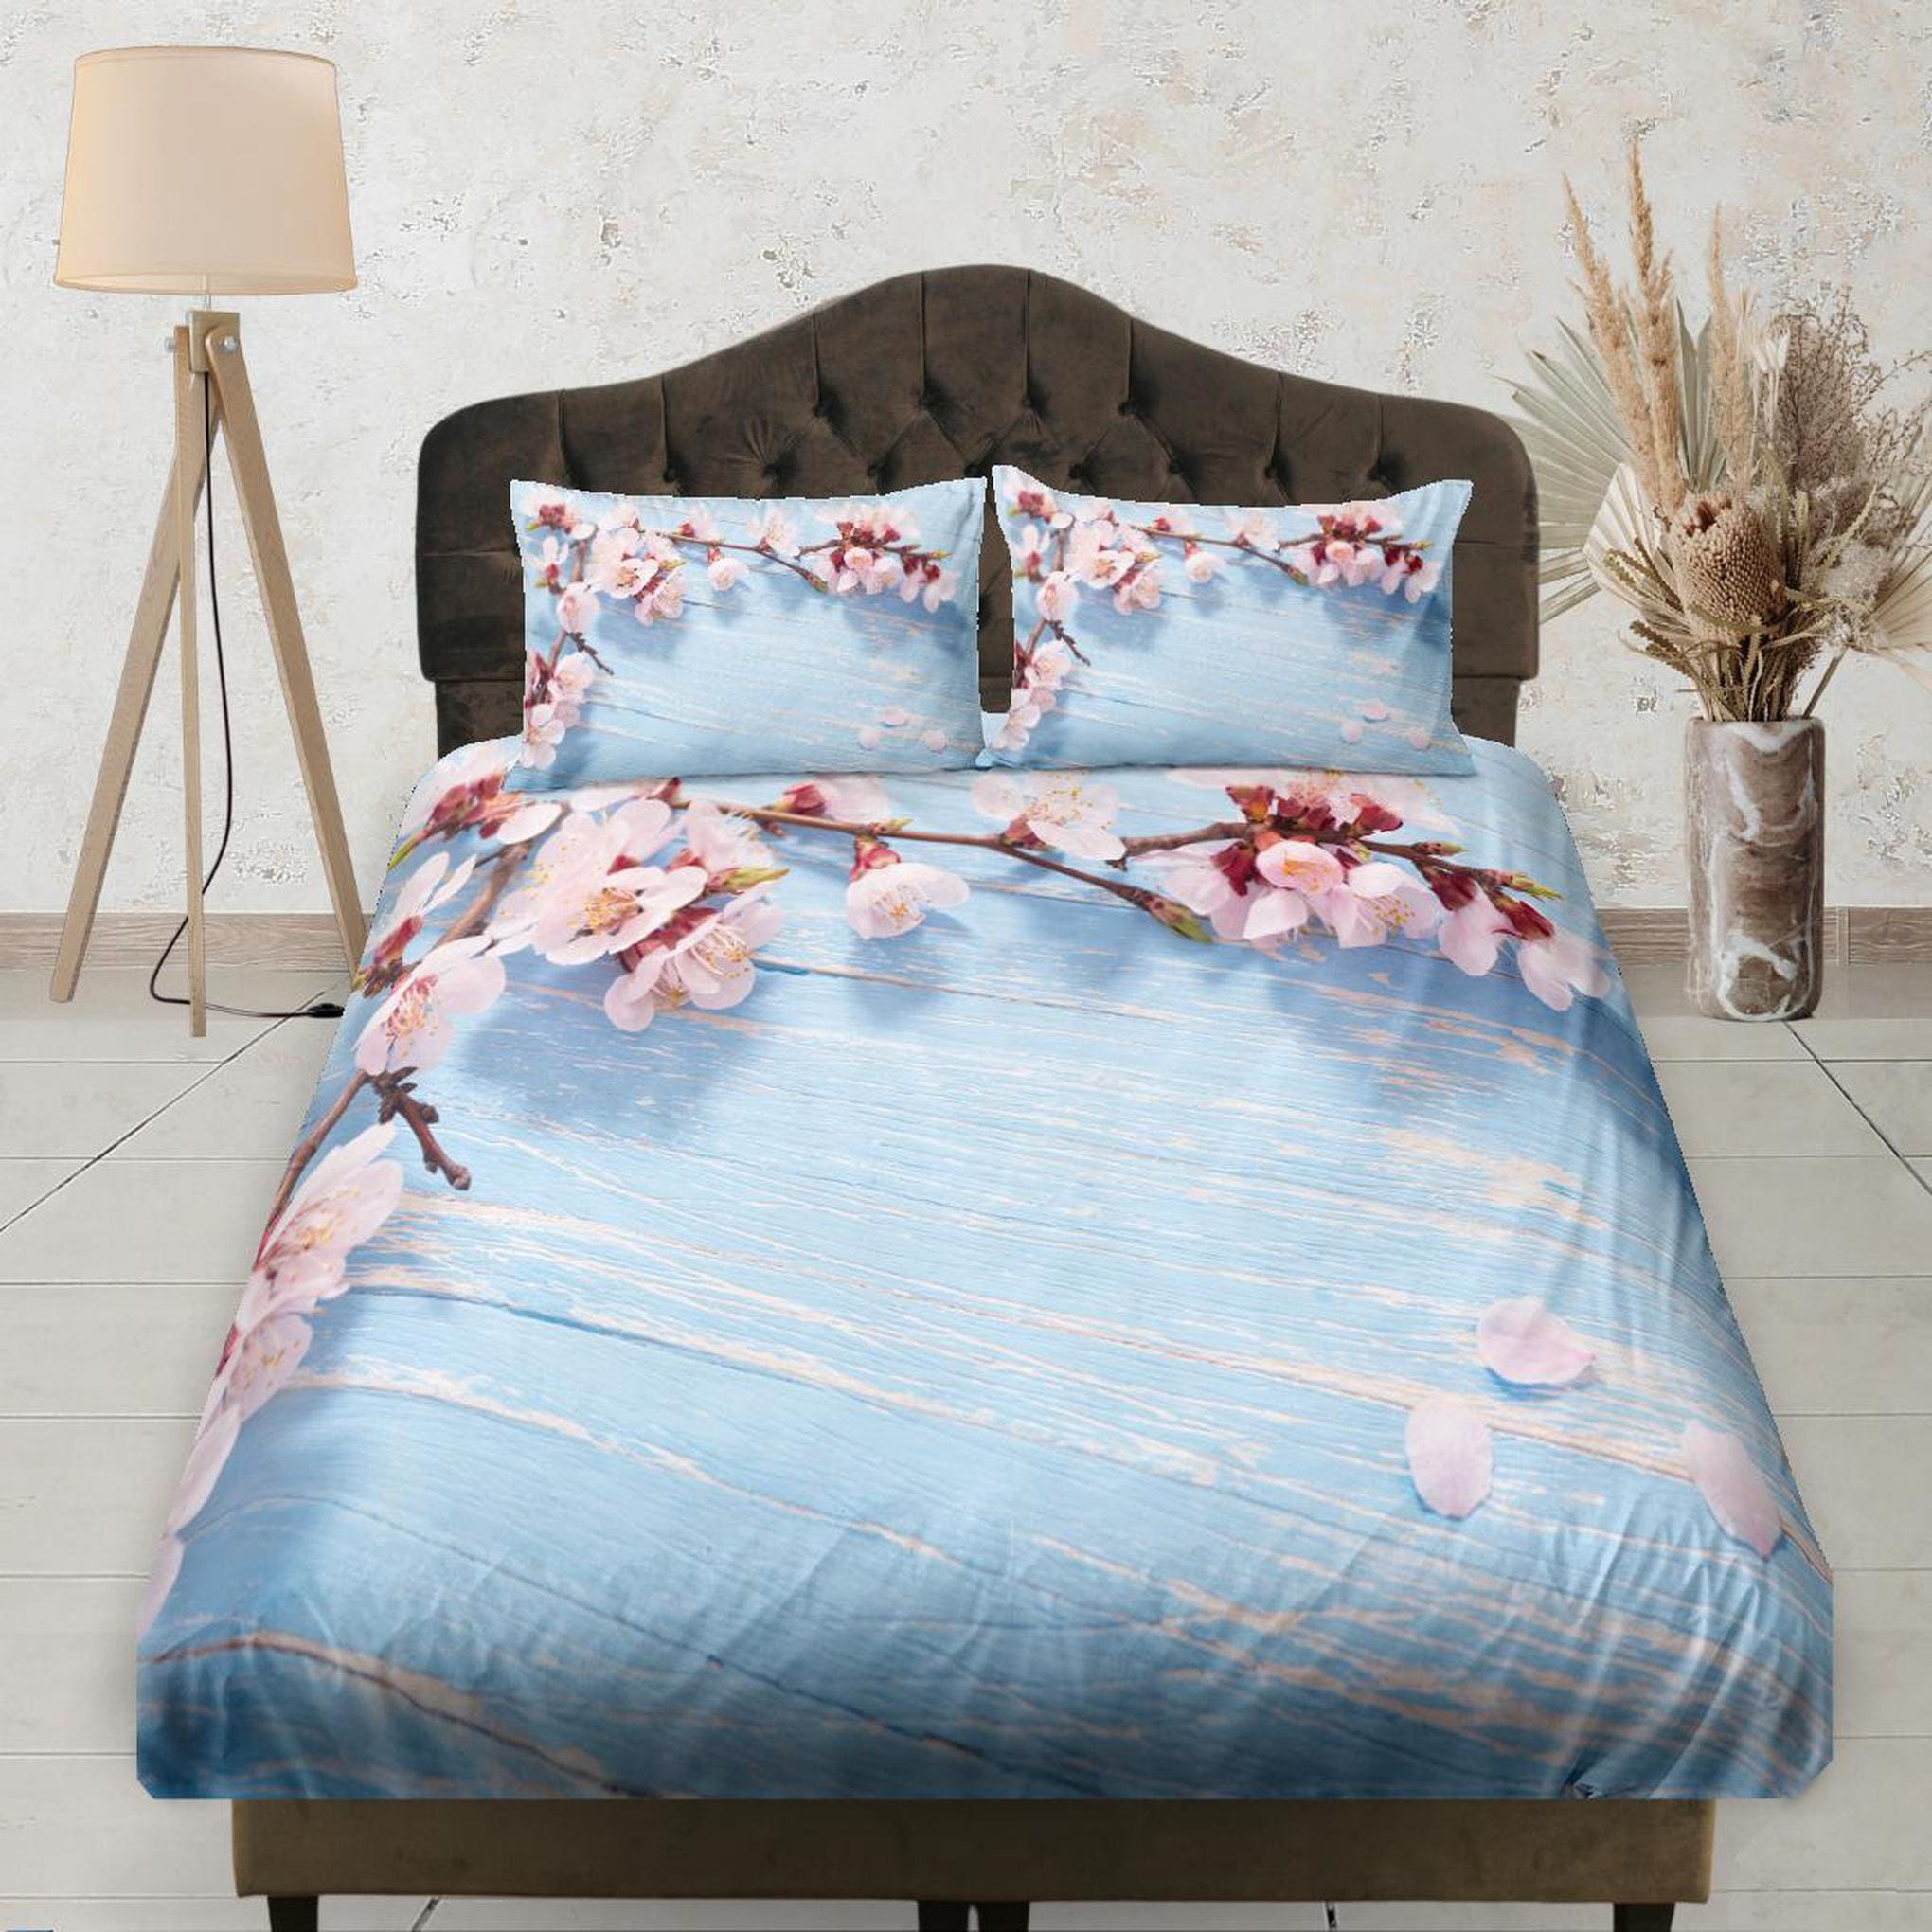 daintyduvet Cherry Blossoms in Light Blue Wood, Floral Printed Bedsheet, Deep Pocket, Boho Bedding Set Full, Dorm Bedding, Shabby Chic Bedding